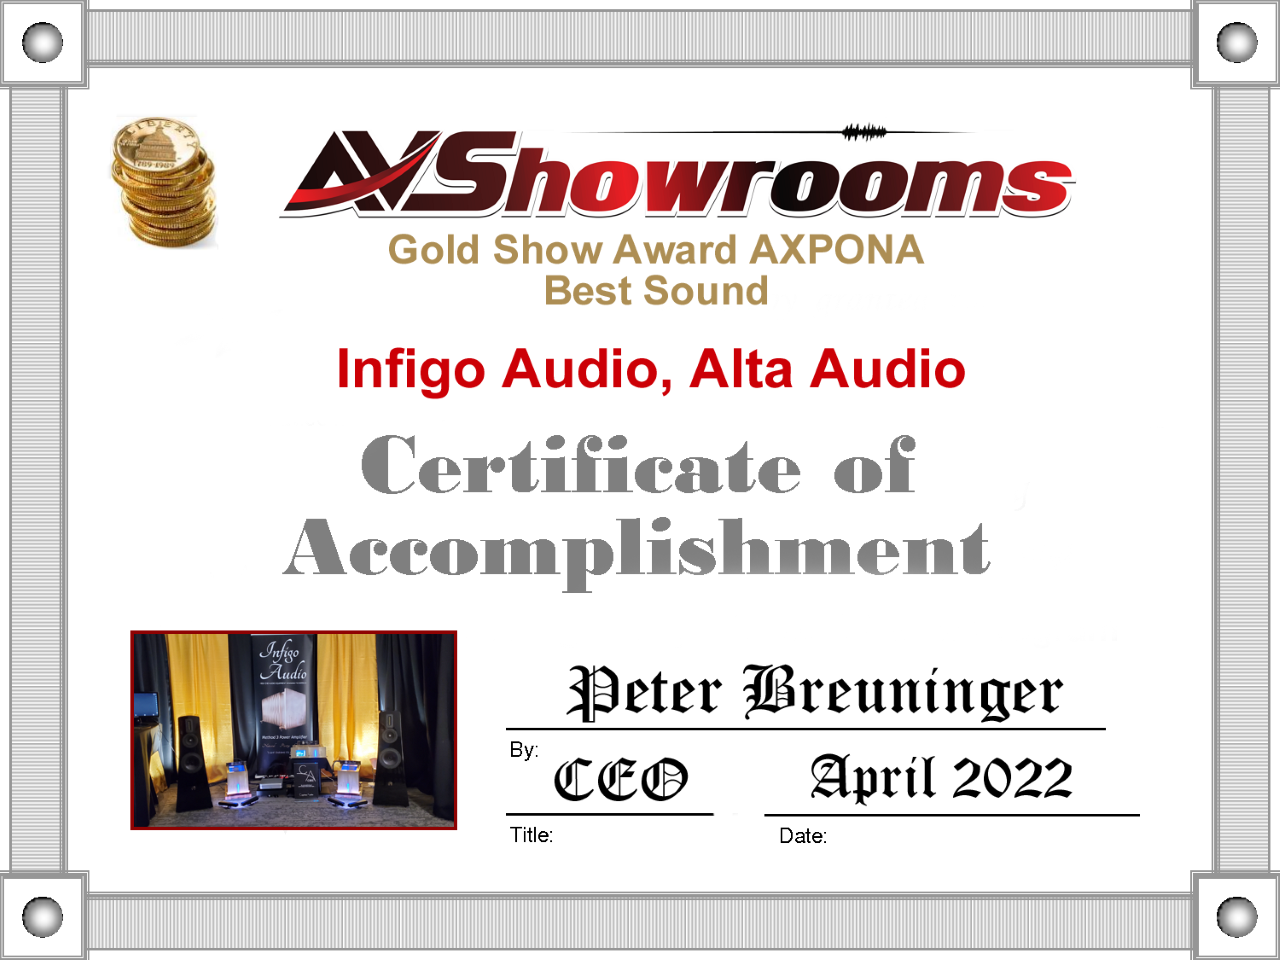 AVShowrooms Gold Show Best Sound Award